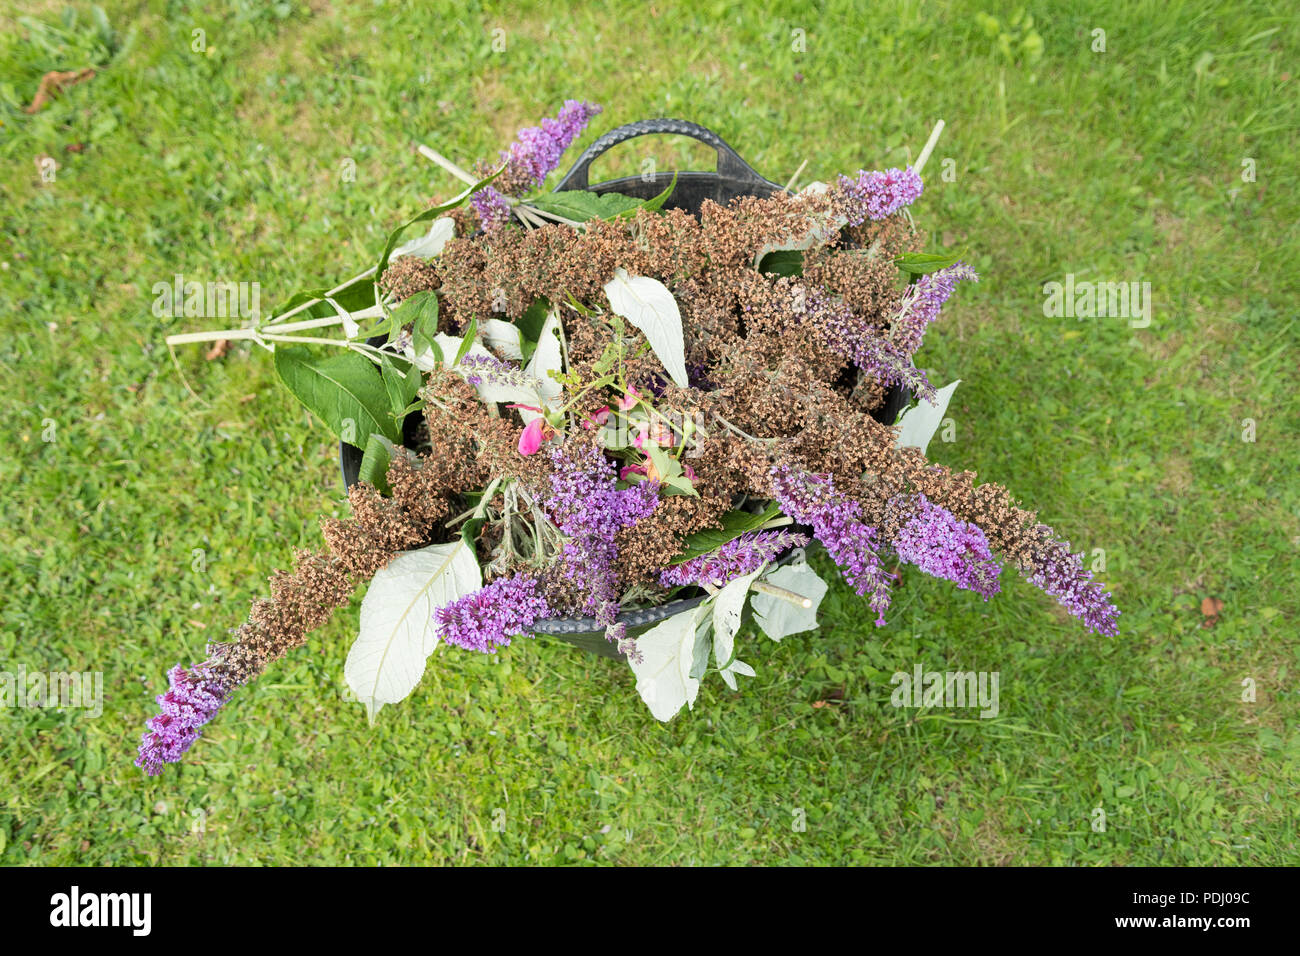 Deadheading - dead buddleja o buddleia le teste dei fiori nel giardino trug dal di sopra Foto Stock